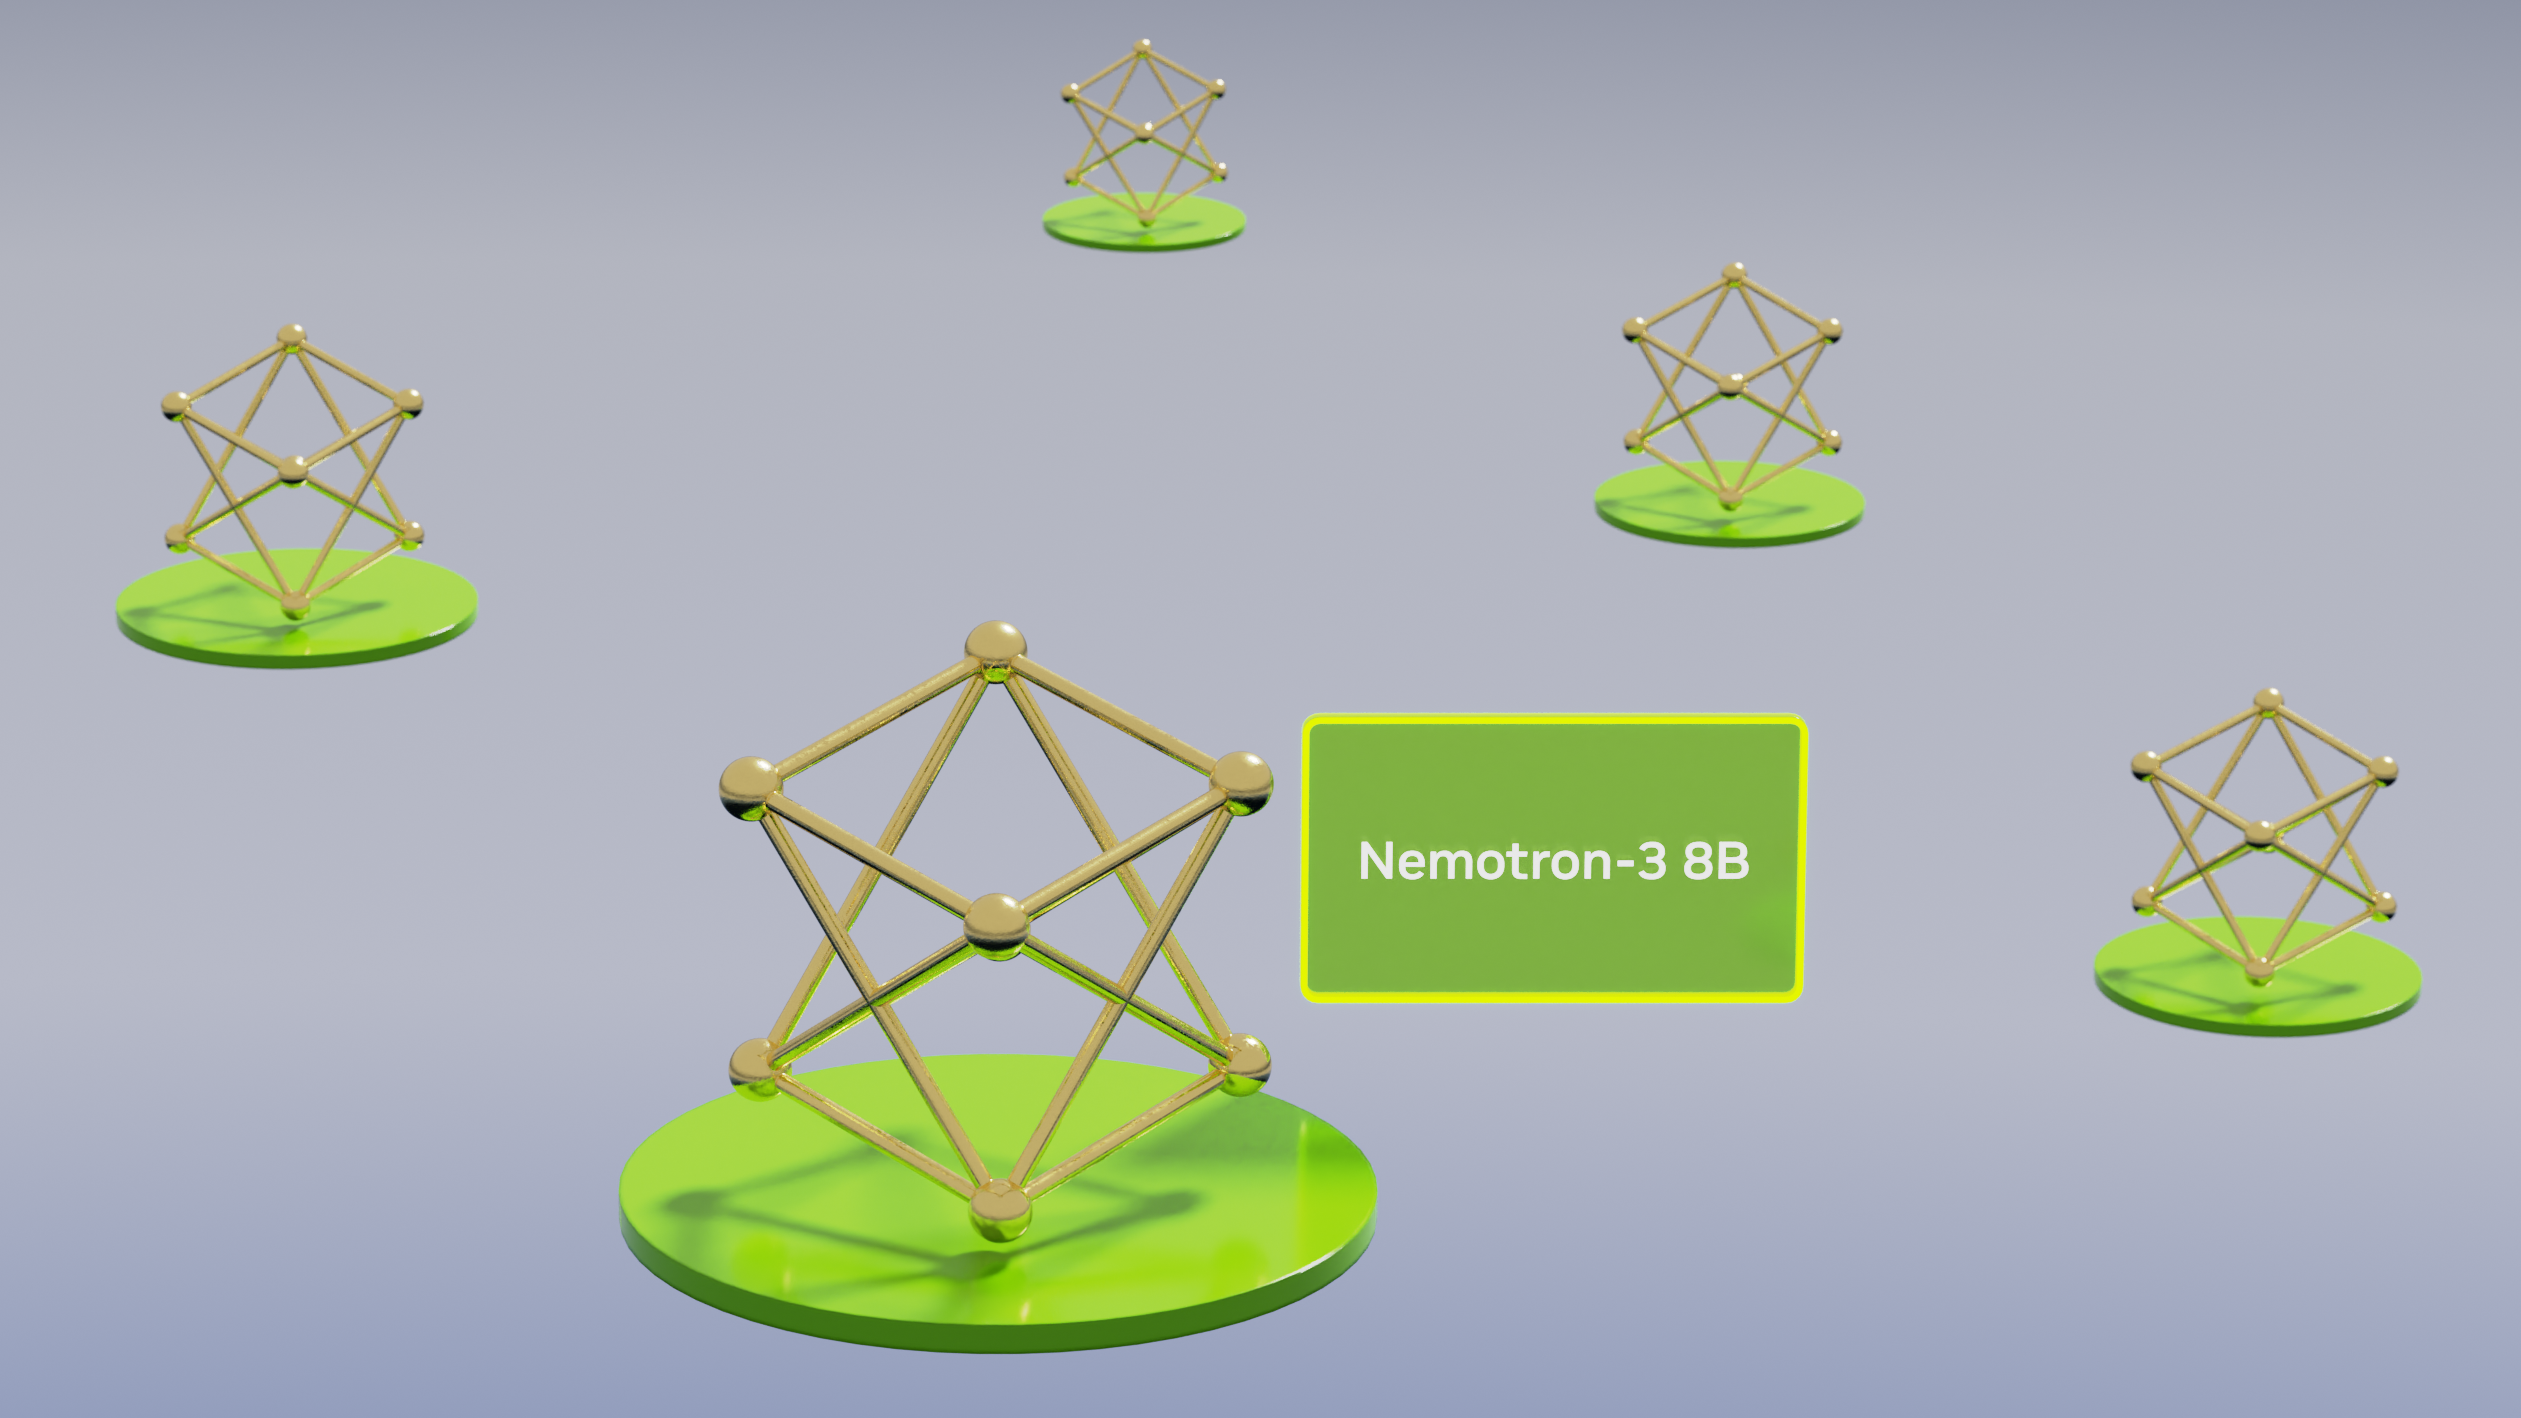 An illustration representing Nemotron-3-8b model family.